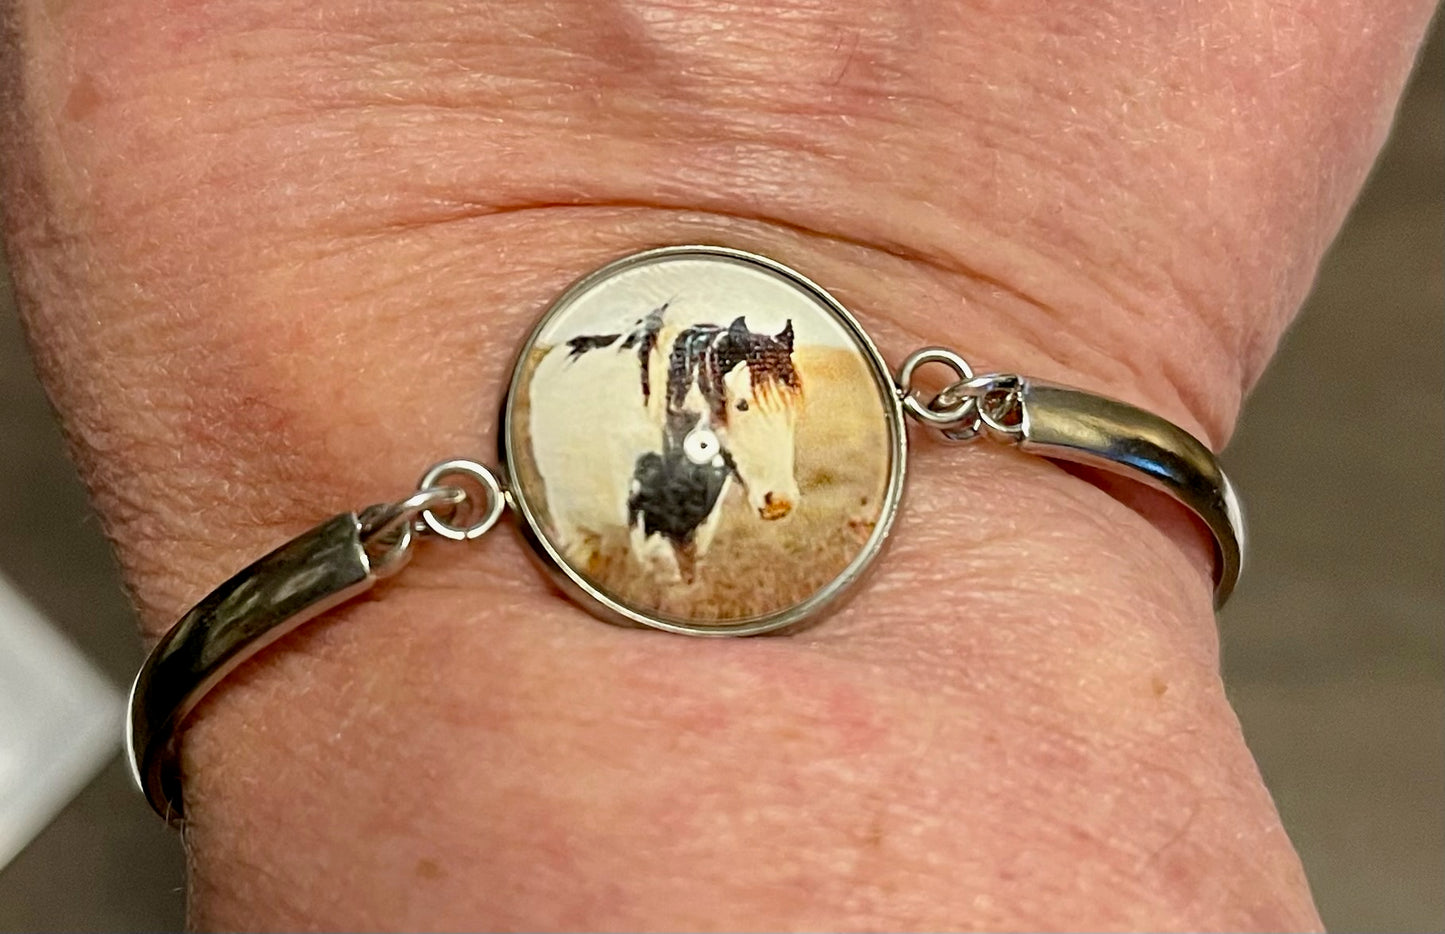 Chasing Horses adjustable metal bracelet